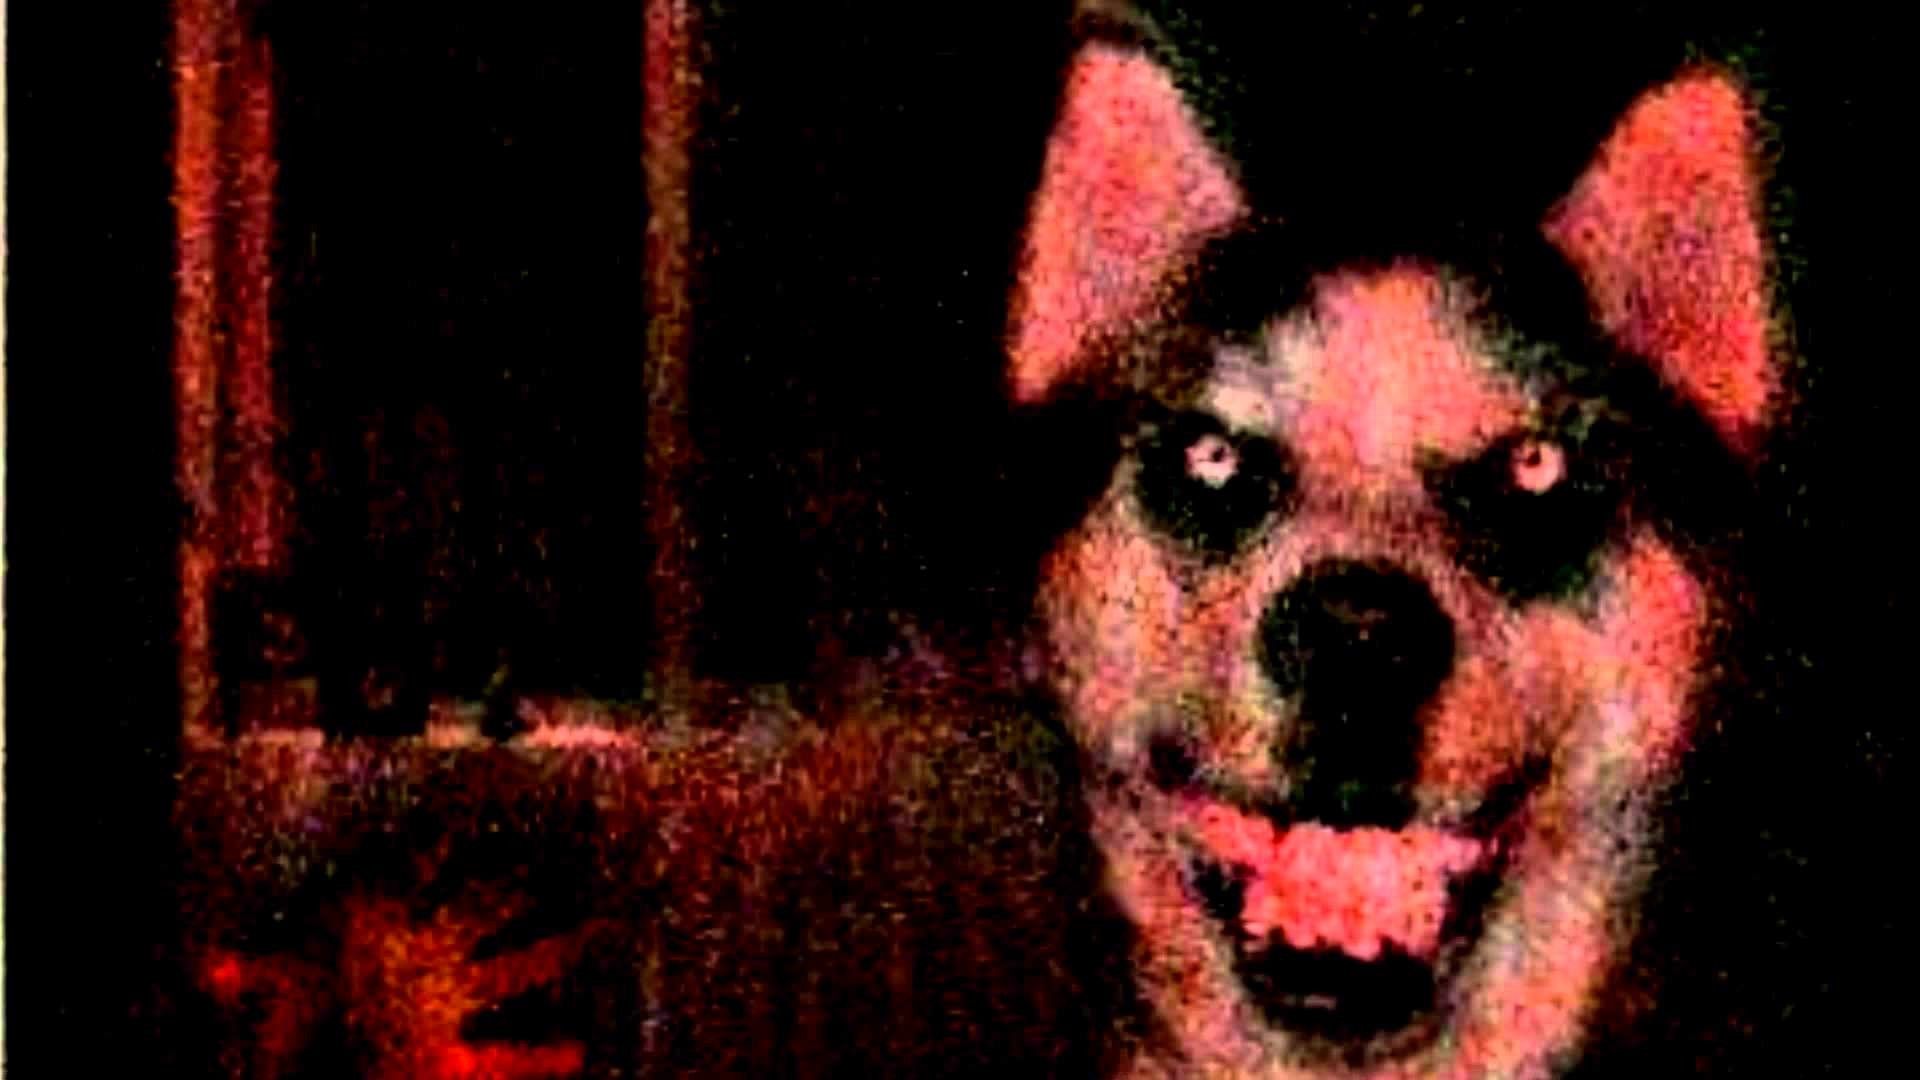 Smile Dog Creepypasta Wallpapers Wallpaper Cave